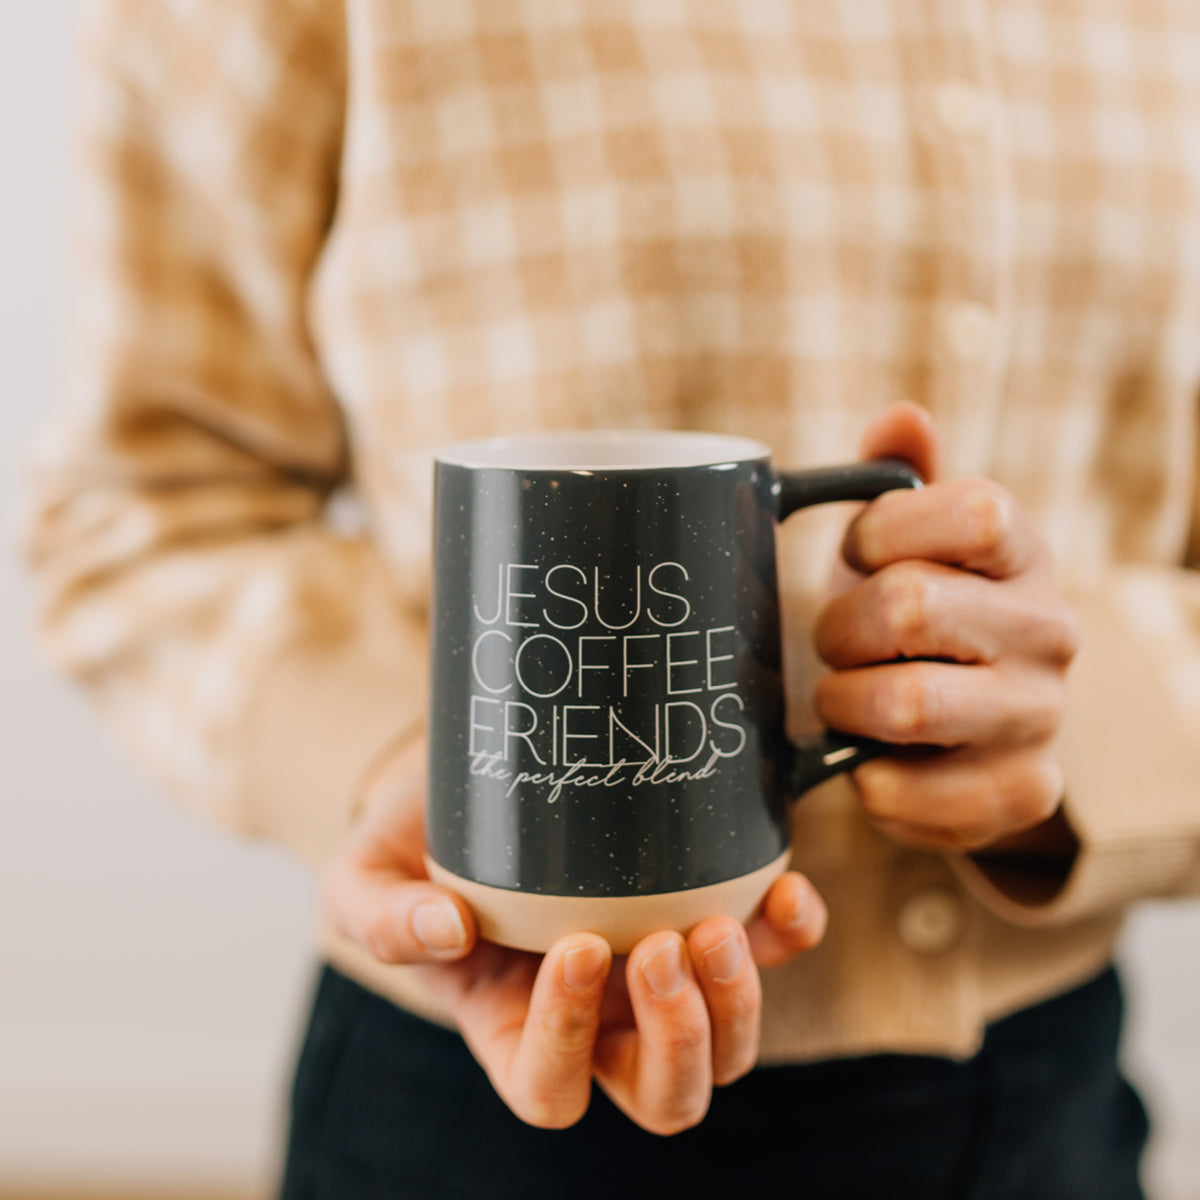 "Jesus, Coffee + Friends" Mug